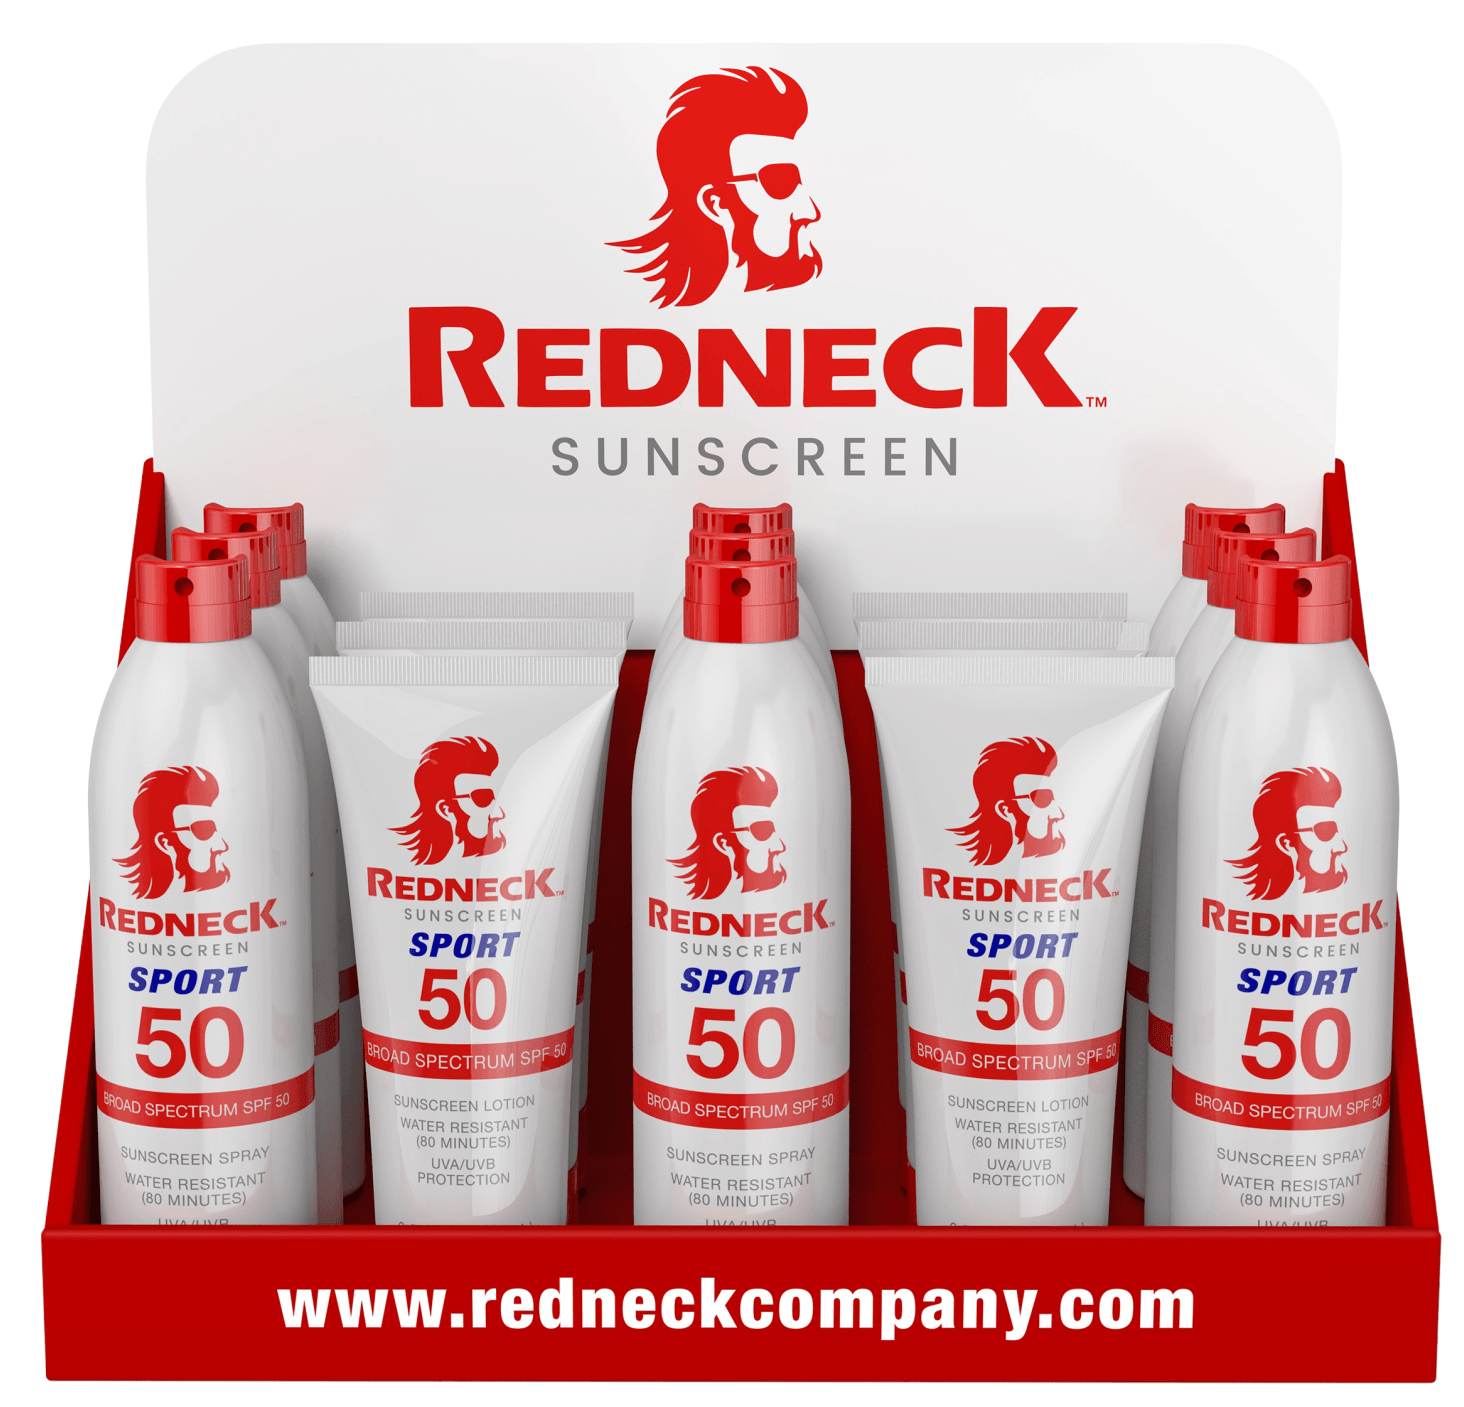 Redneck Company logo